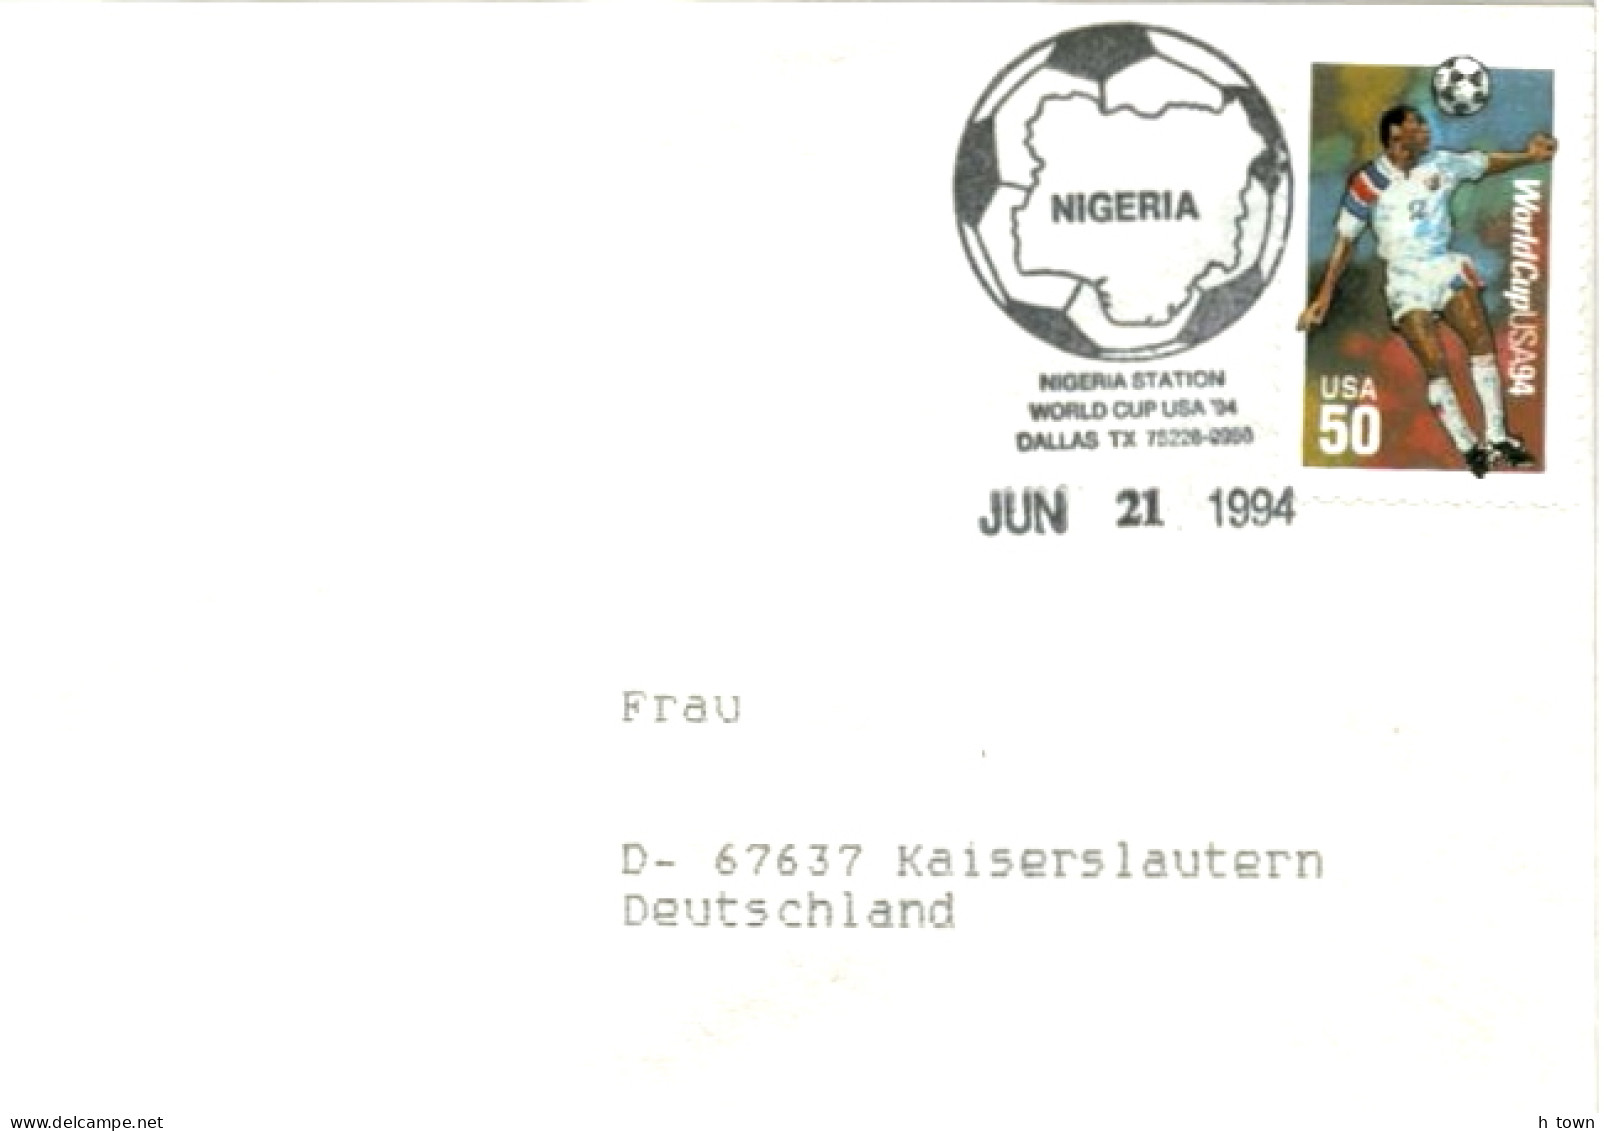 824  Coupe Du Monde 1994, États-Unis: Oblit. Dallas "Nigeria Station" - FIFA World Cup, USA. Football Soccer - 1994 – USA